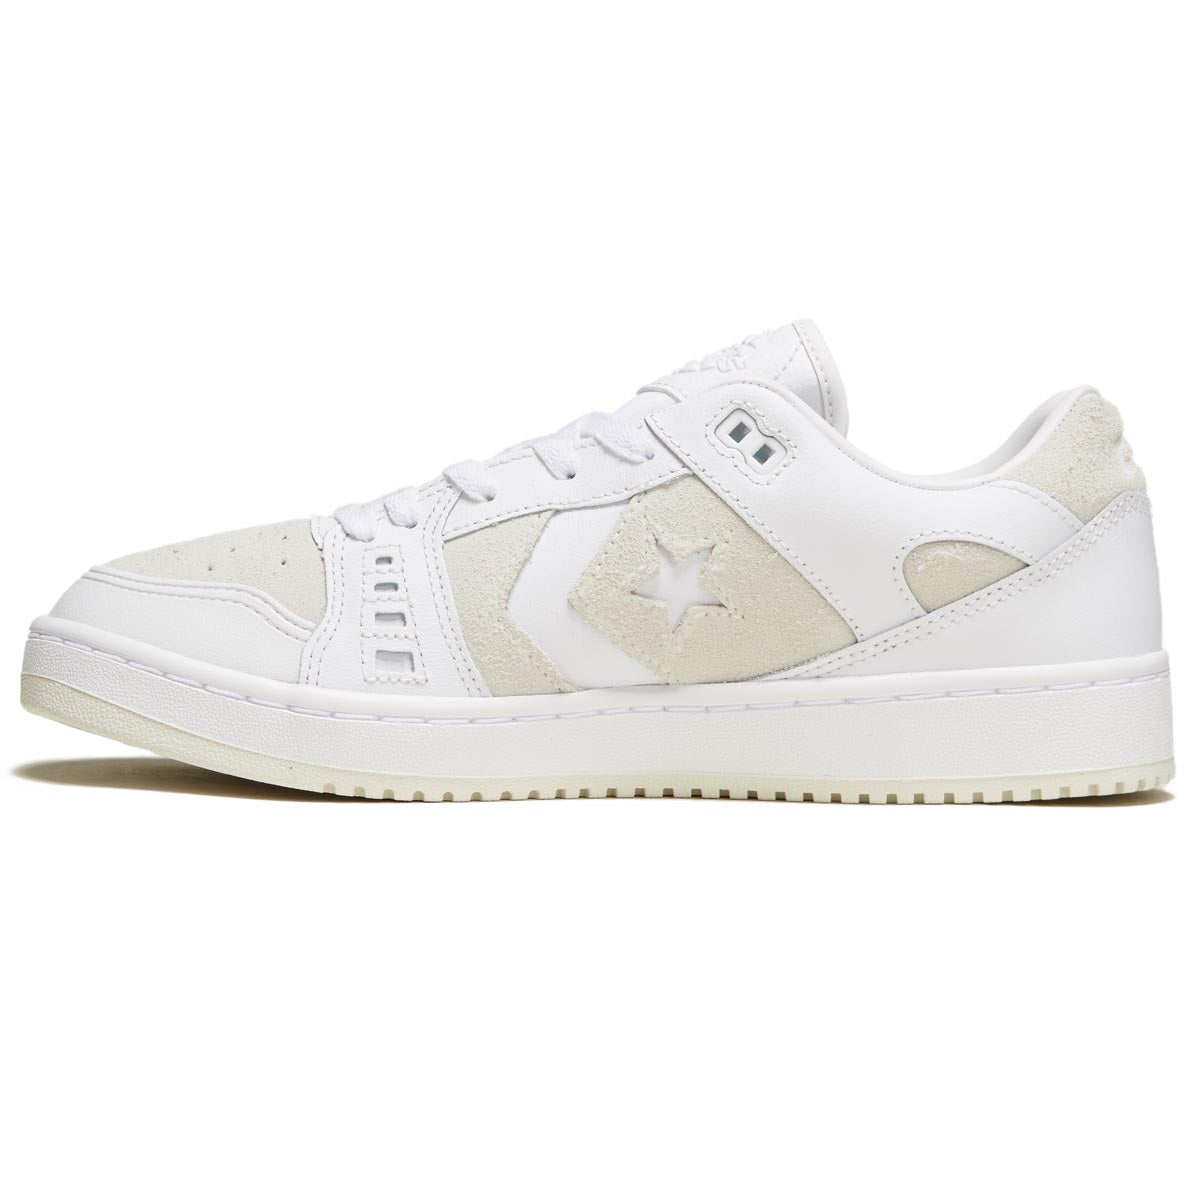 Converse AS-1 Pro Shoes - White/Vaporous Gray/White image 2